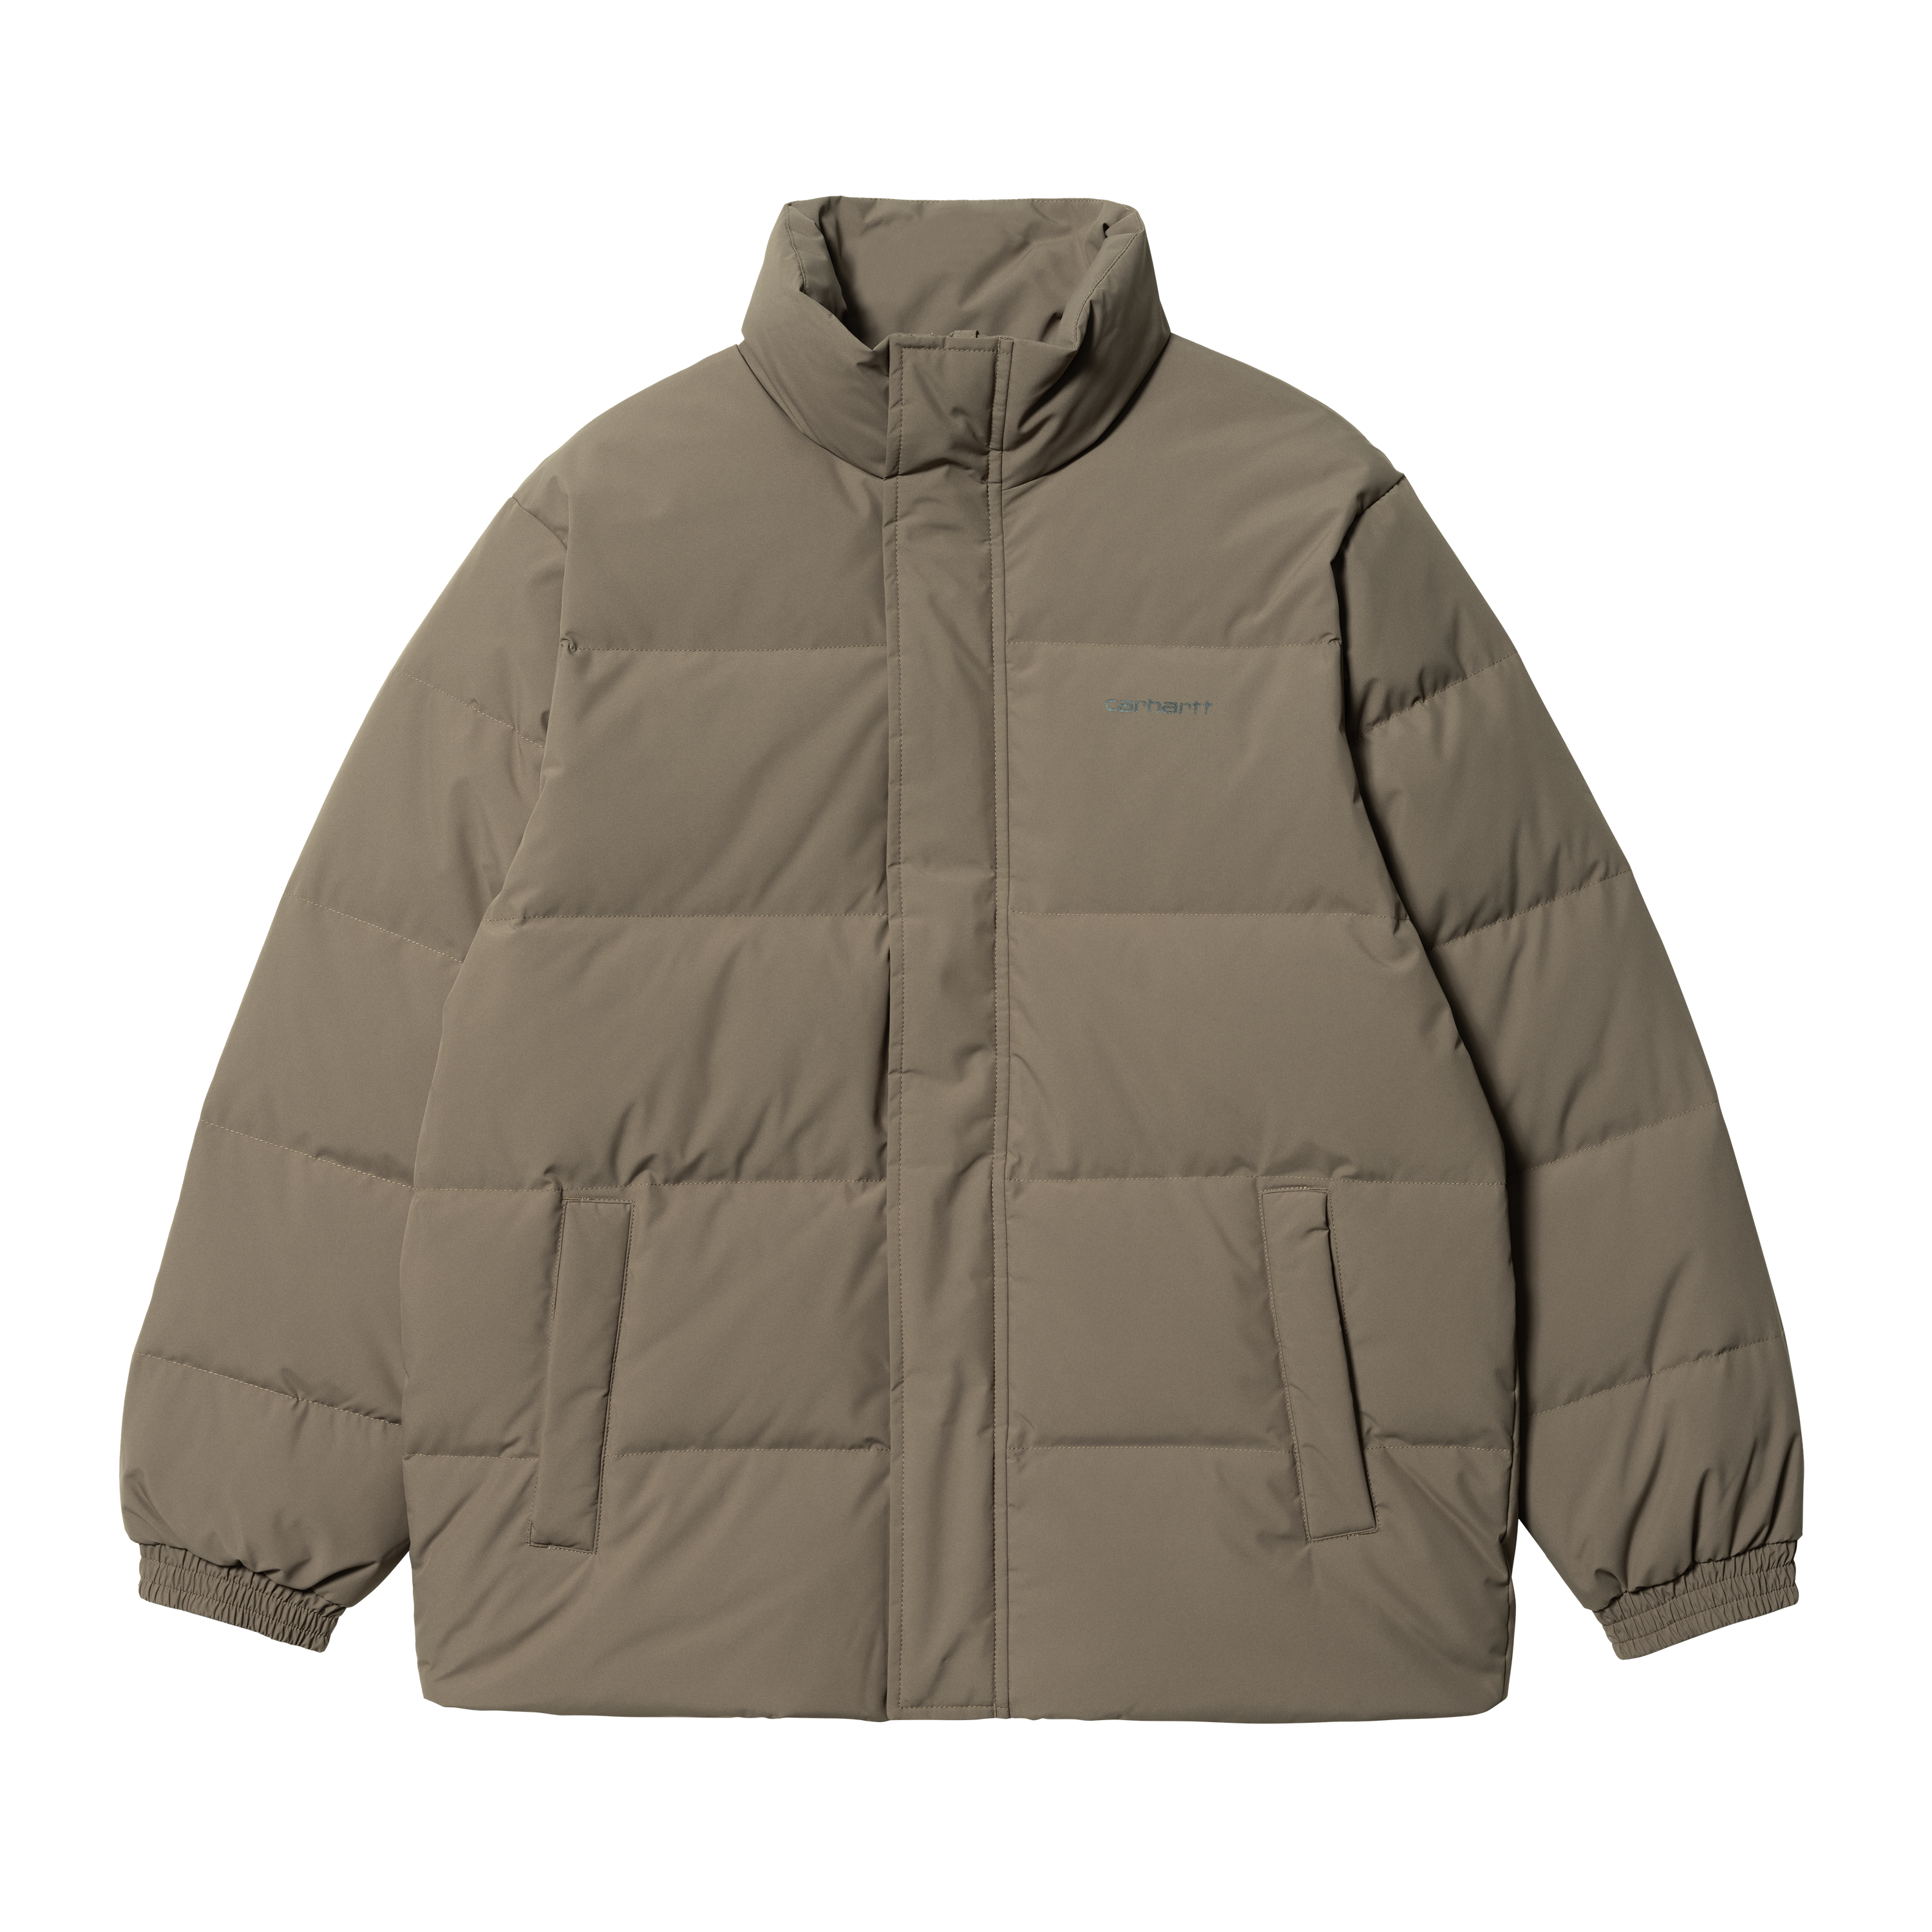 Carhartt WIP Jackets & Vests Winter Jackets